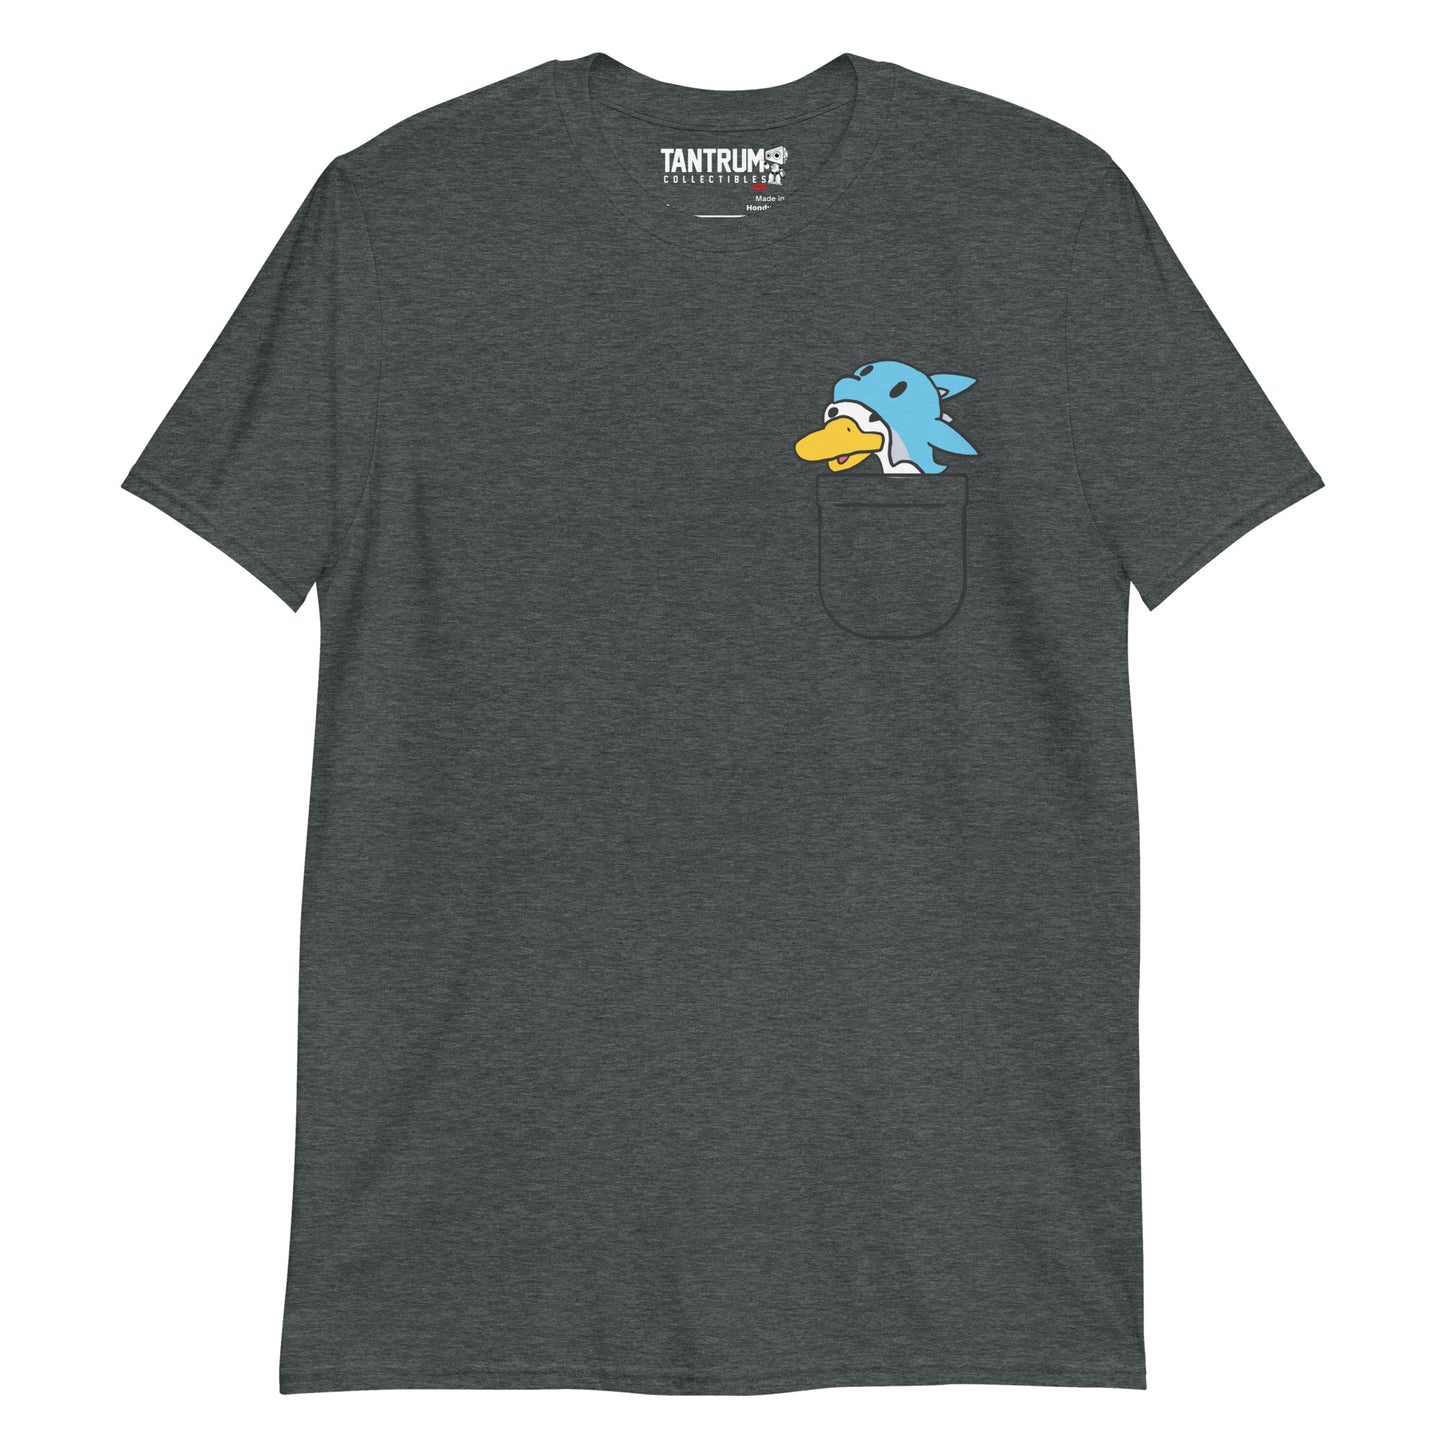 FinalFeentasy - Unisex T-Shirt - Printed Pocket (Series 1) Hat (Streamer Purchase)